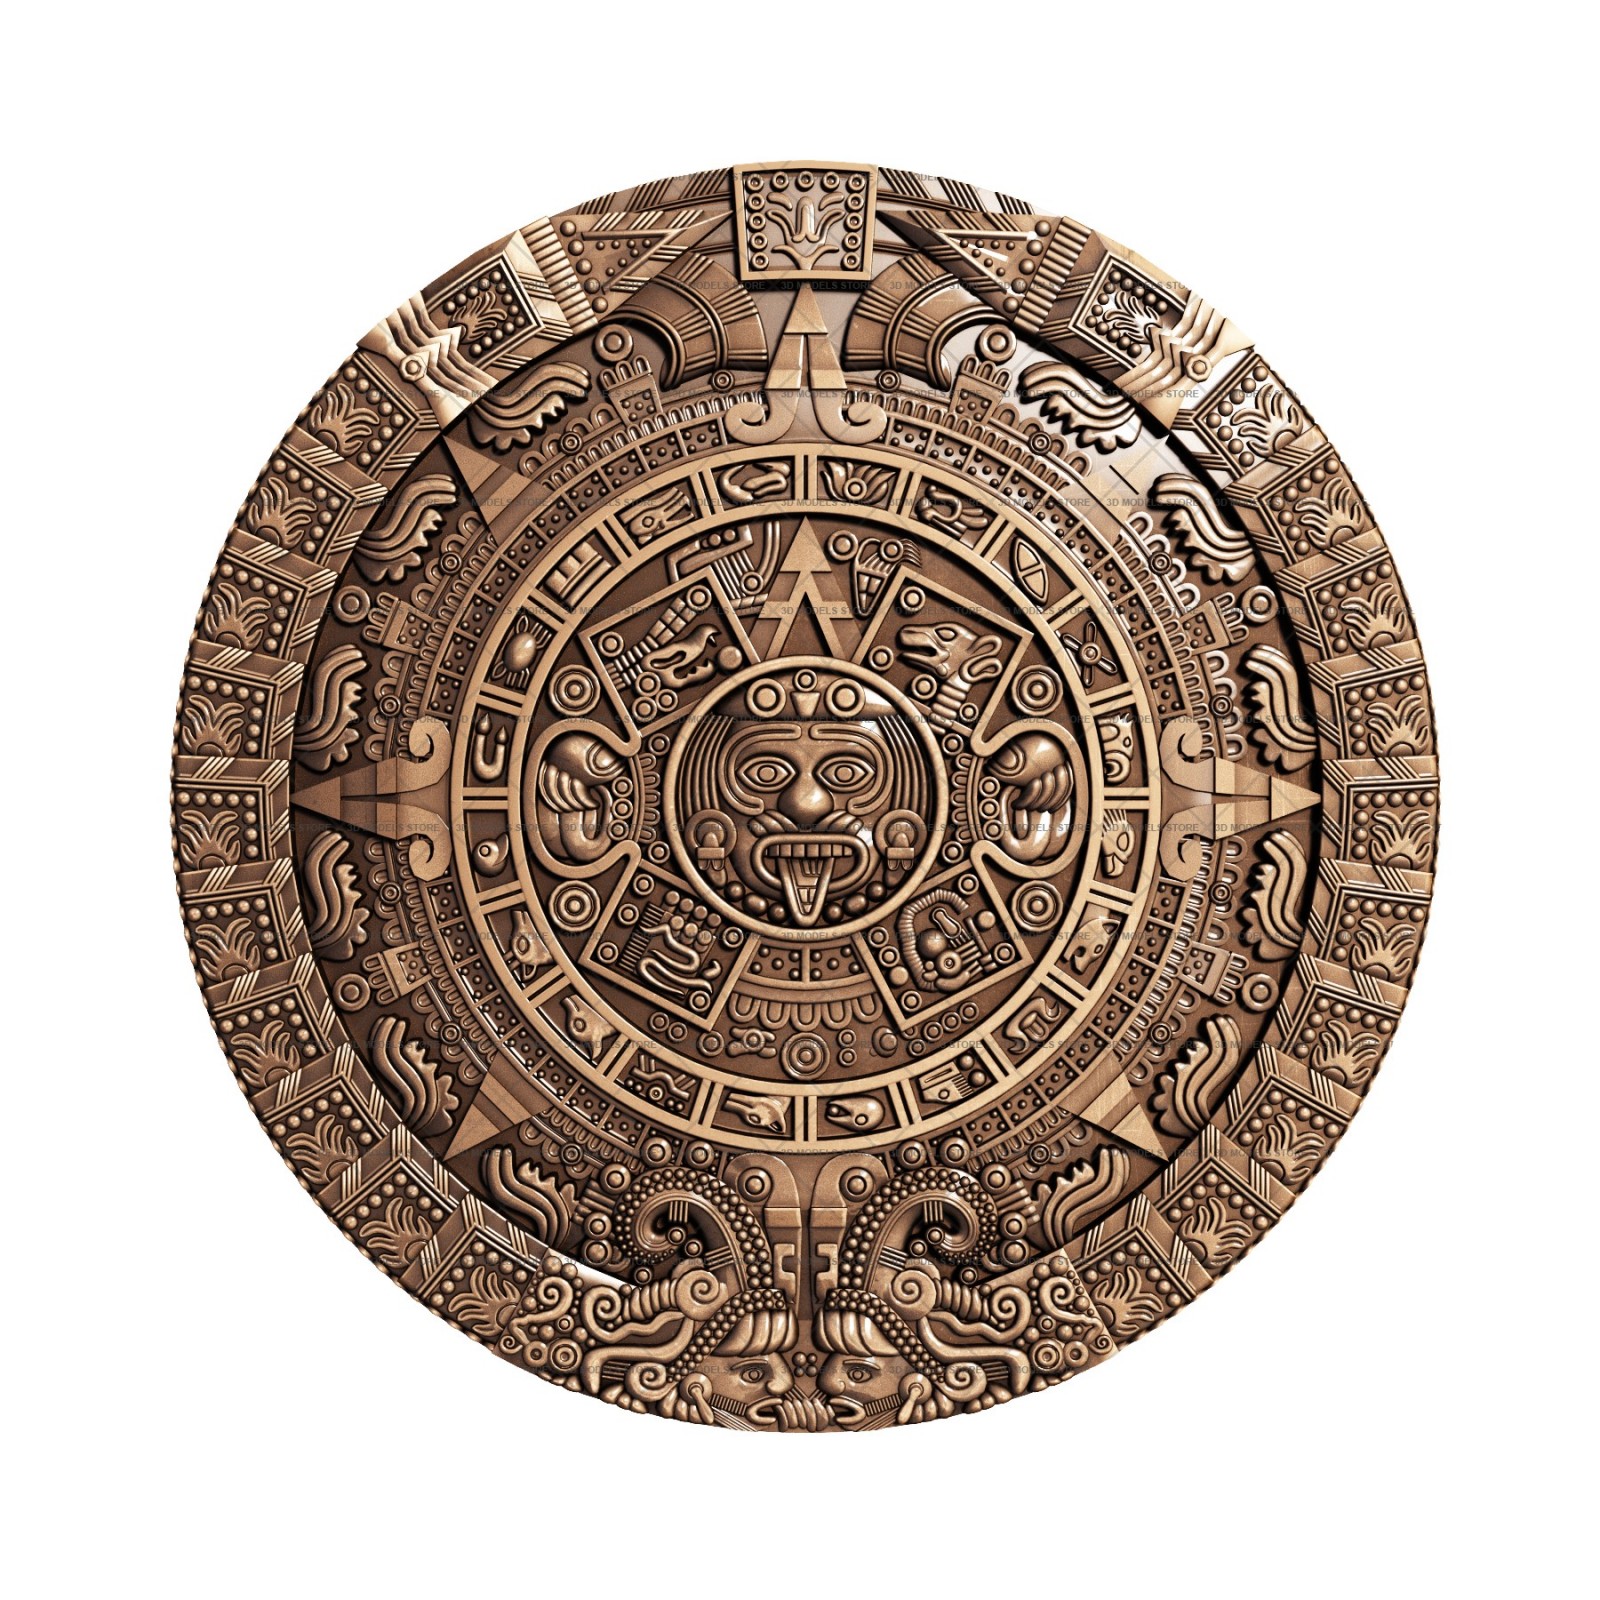 Mayan calendar brlf_0003 - 3d models (stl)